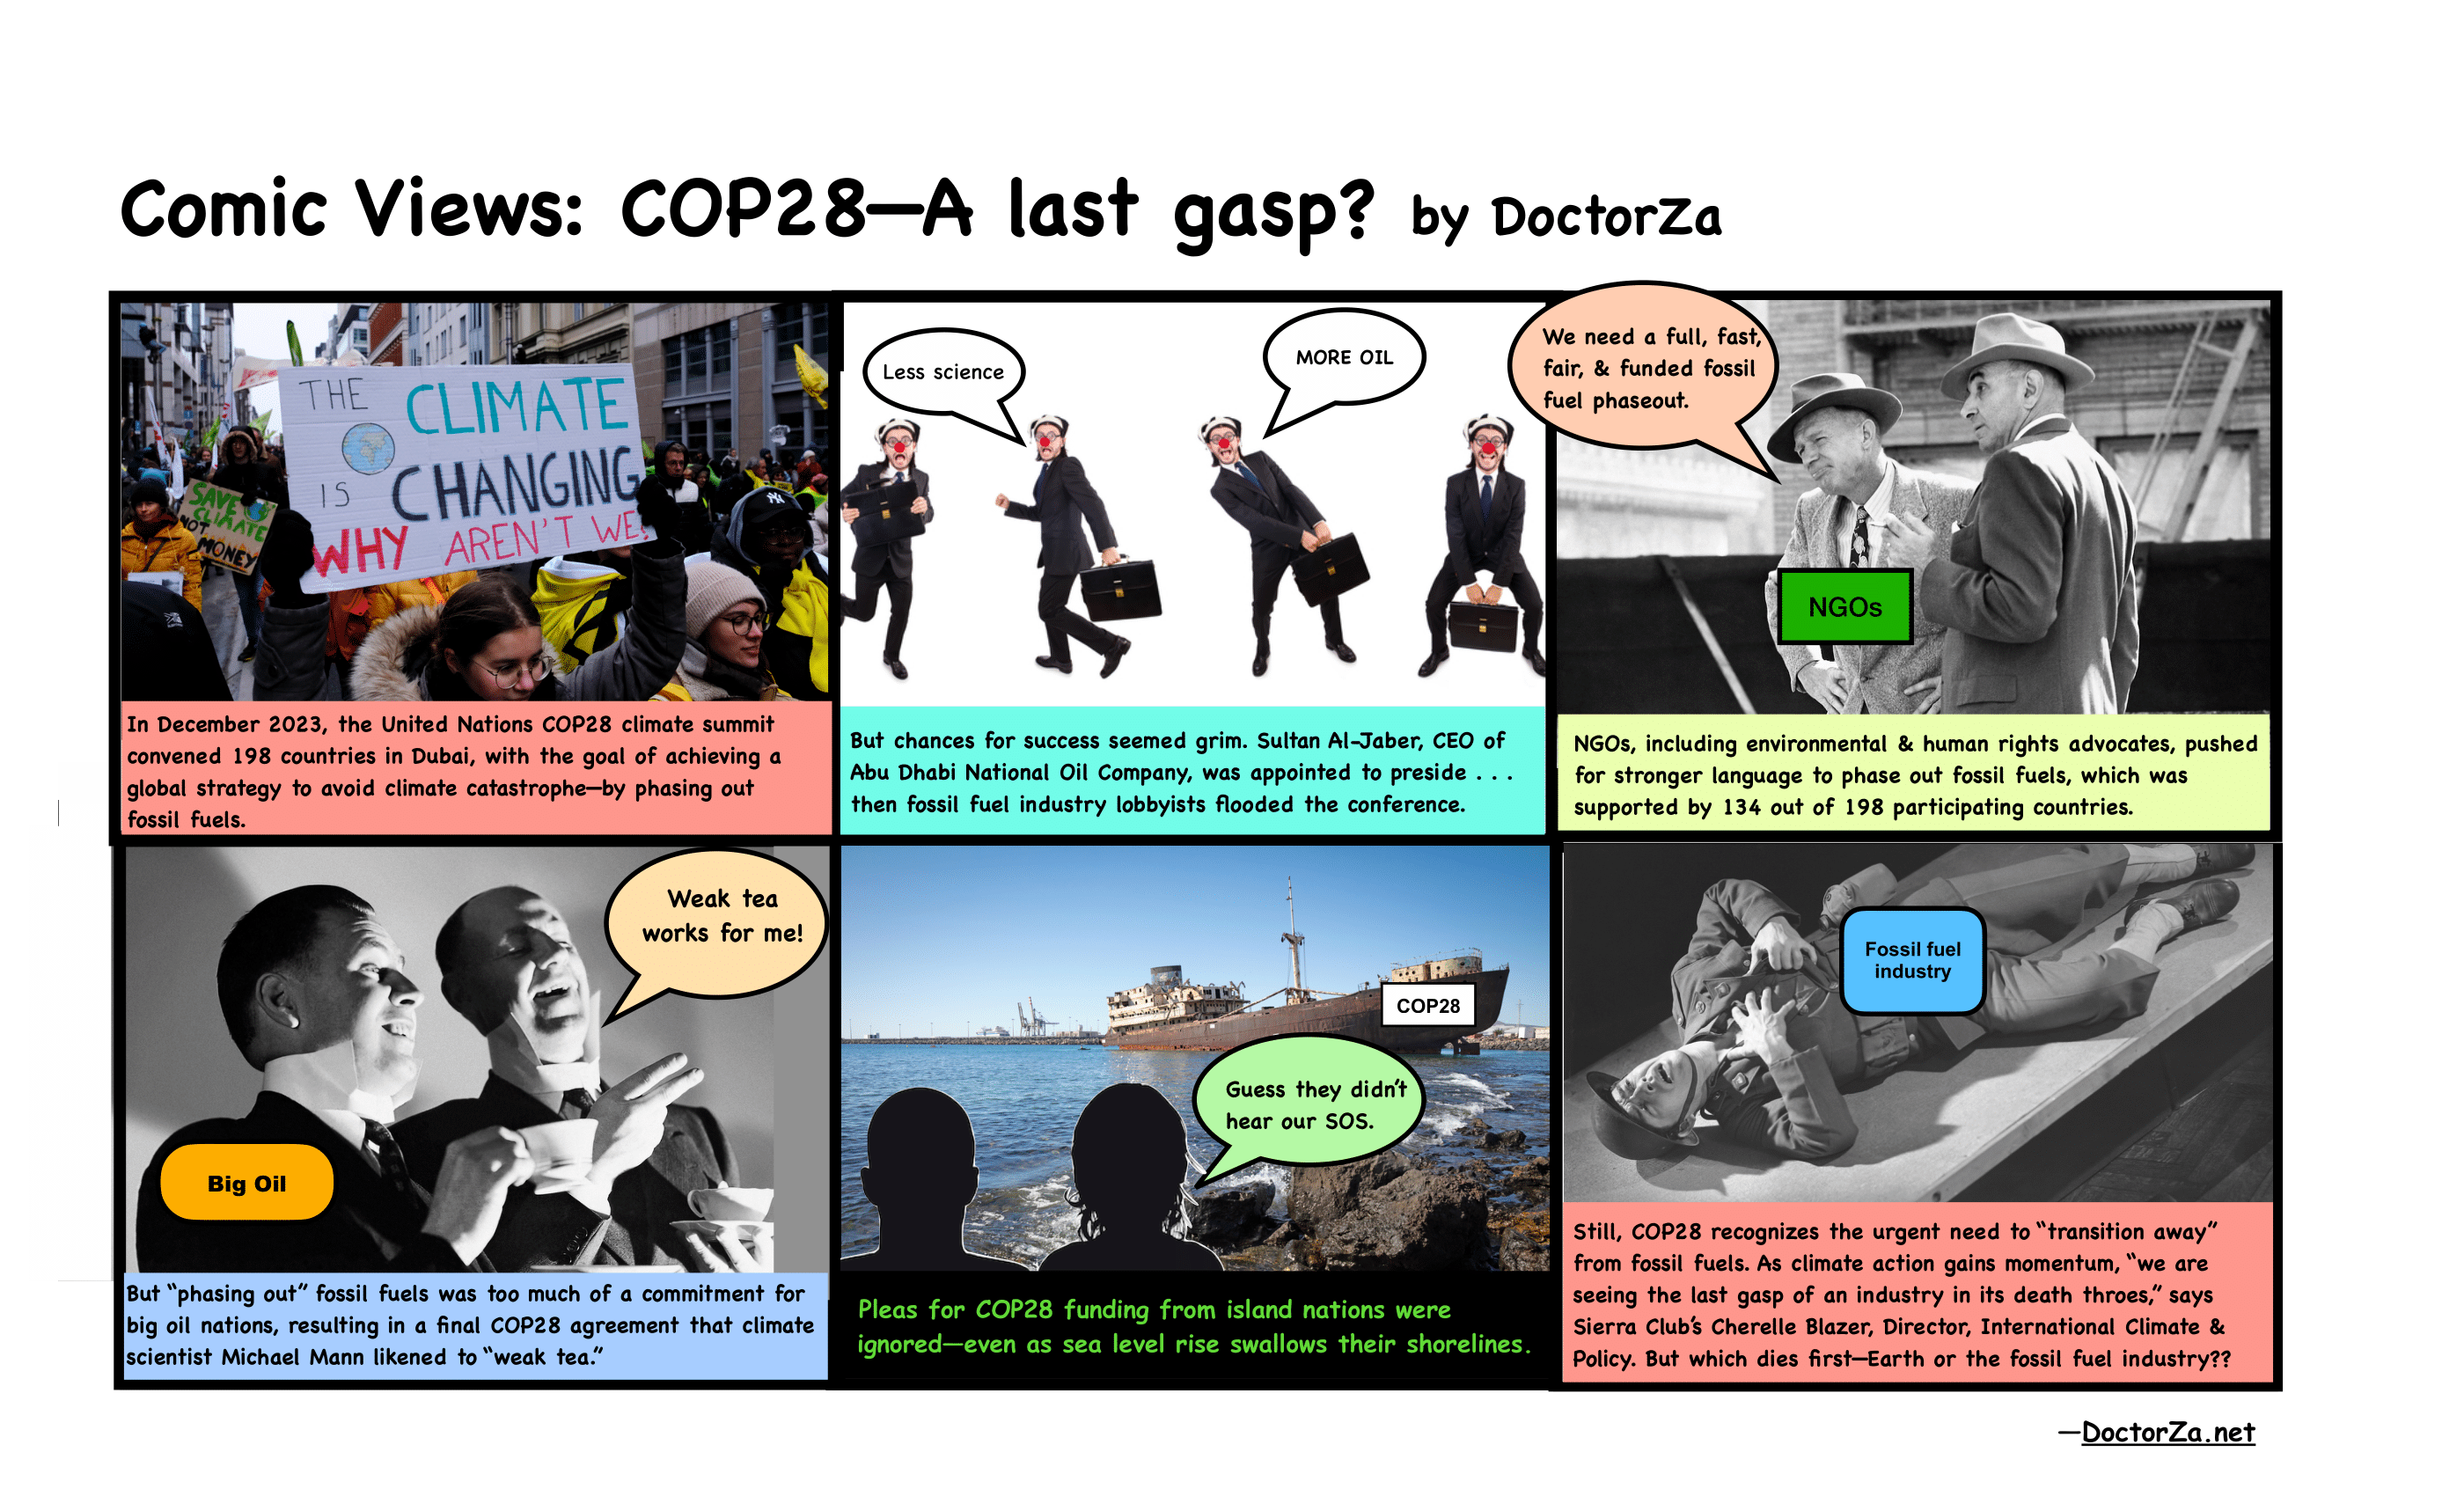 a 6 panel cartoon depicting the chaos at COP 28